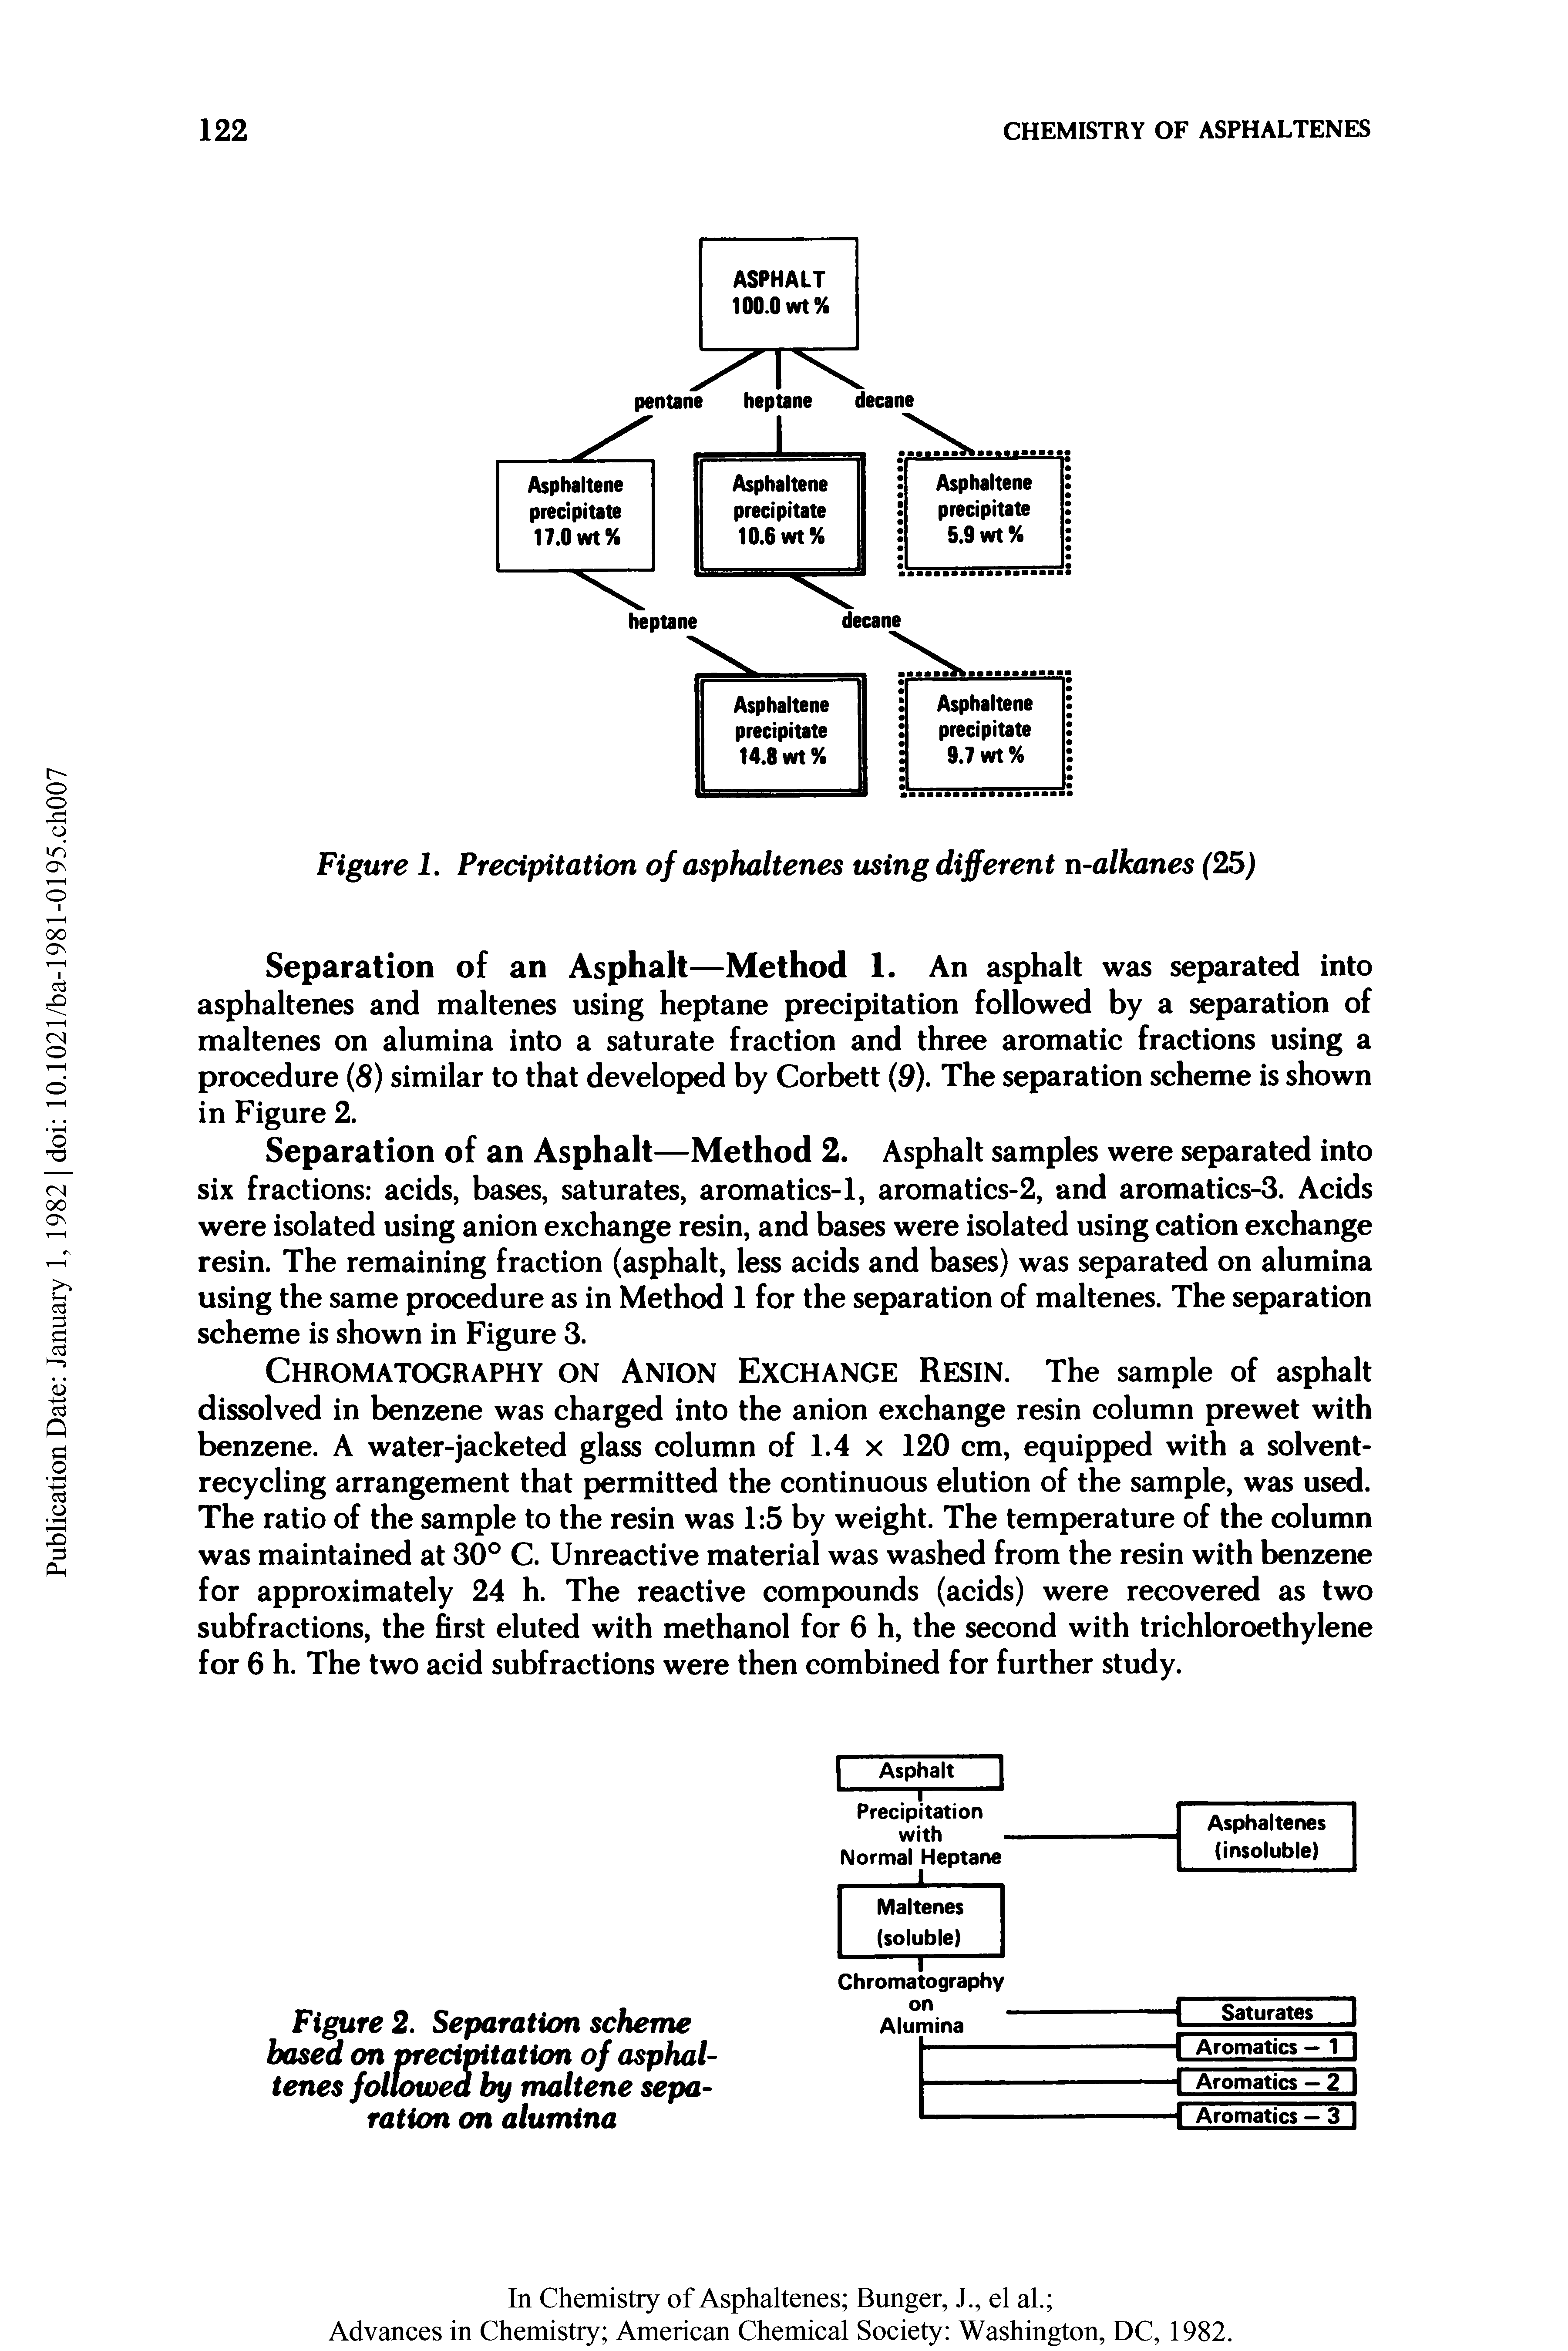 Figure 2. Separation scheme based on precipitation of asphaltenes followed by maltene separation on alumina...